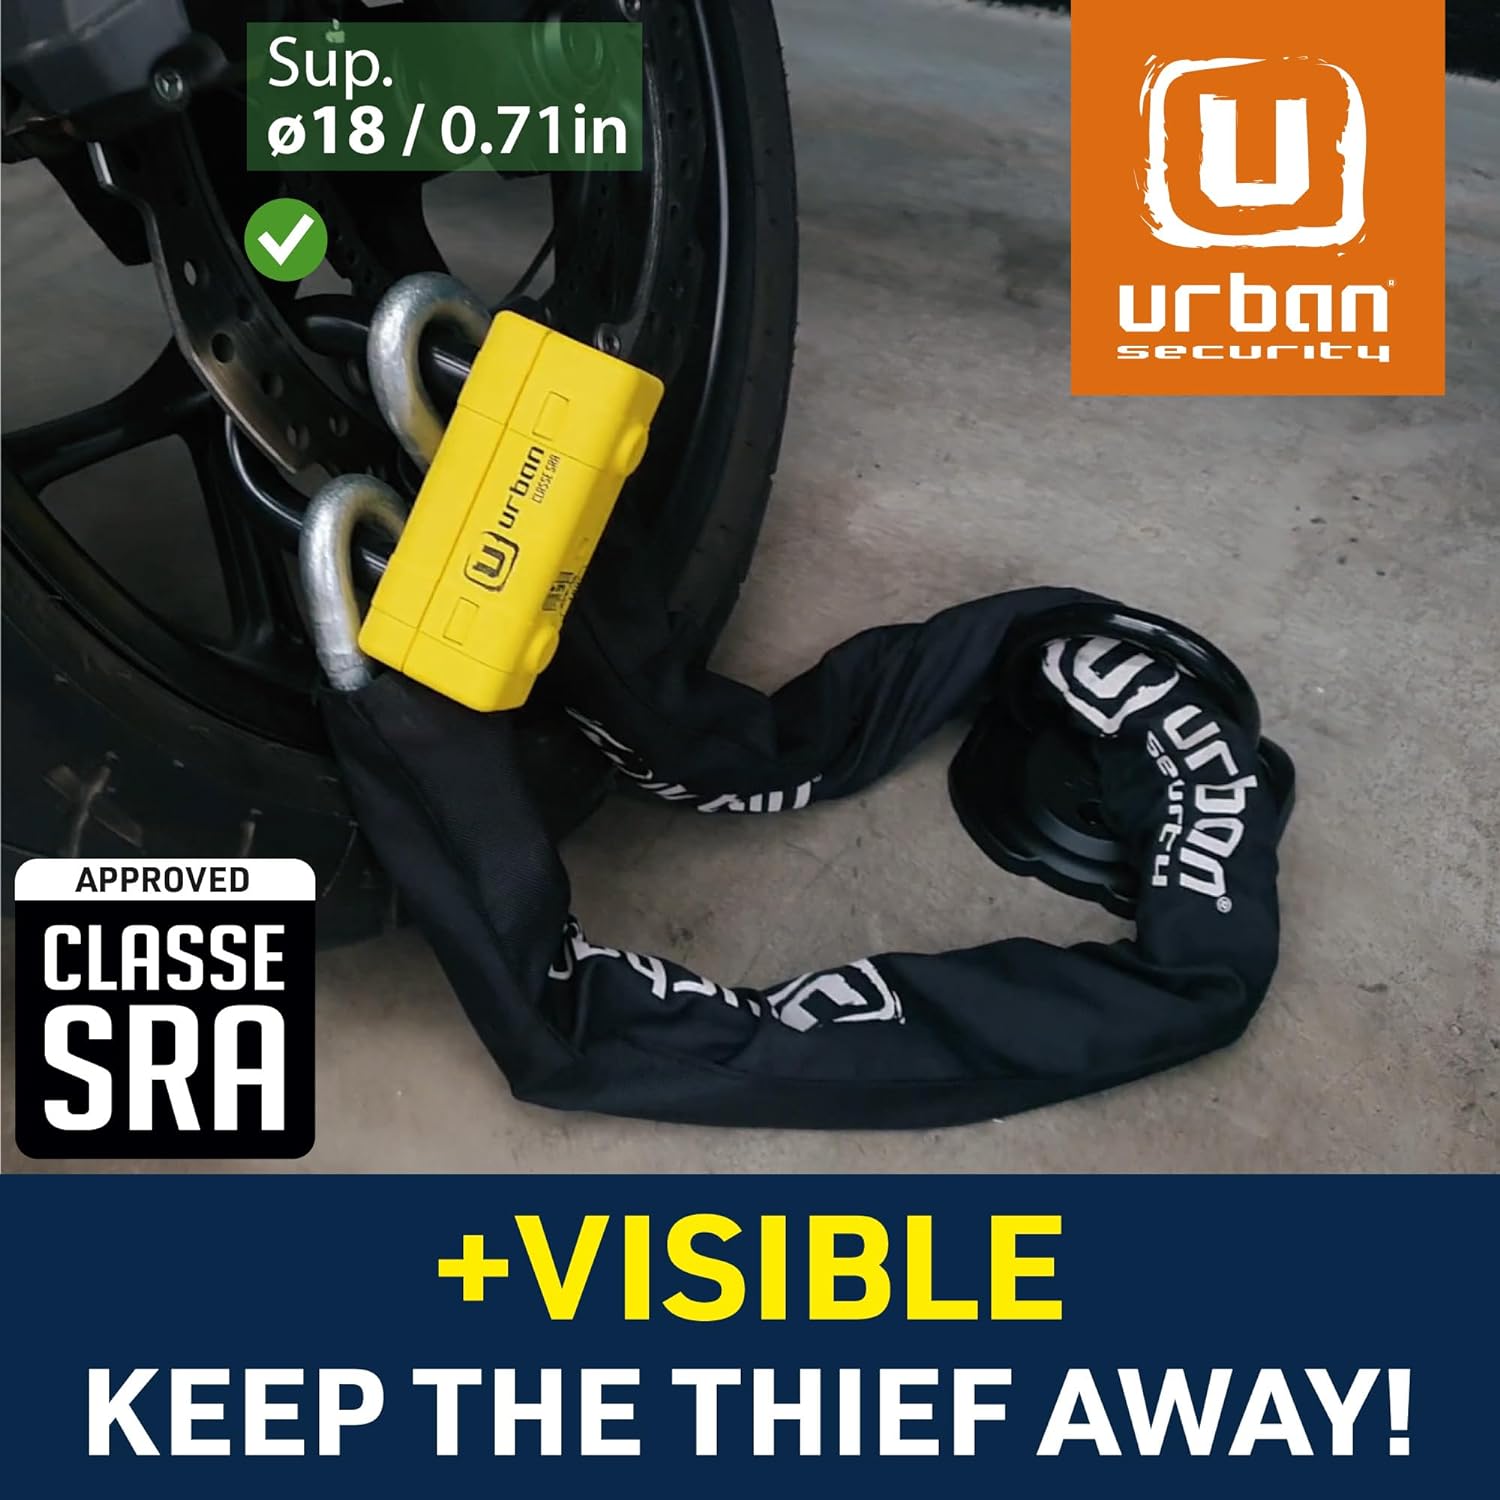 Urban Security UR75150 150cm Motorcycle Chain + Lock - Security Level 20-UR75150-Security-Pyramid Motorcycle Accessories